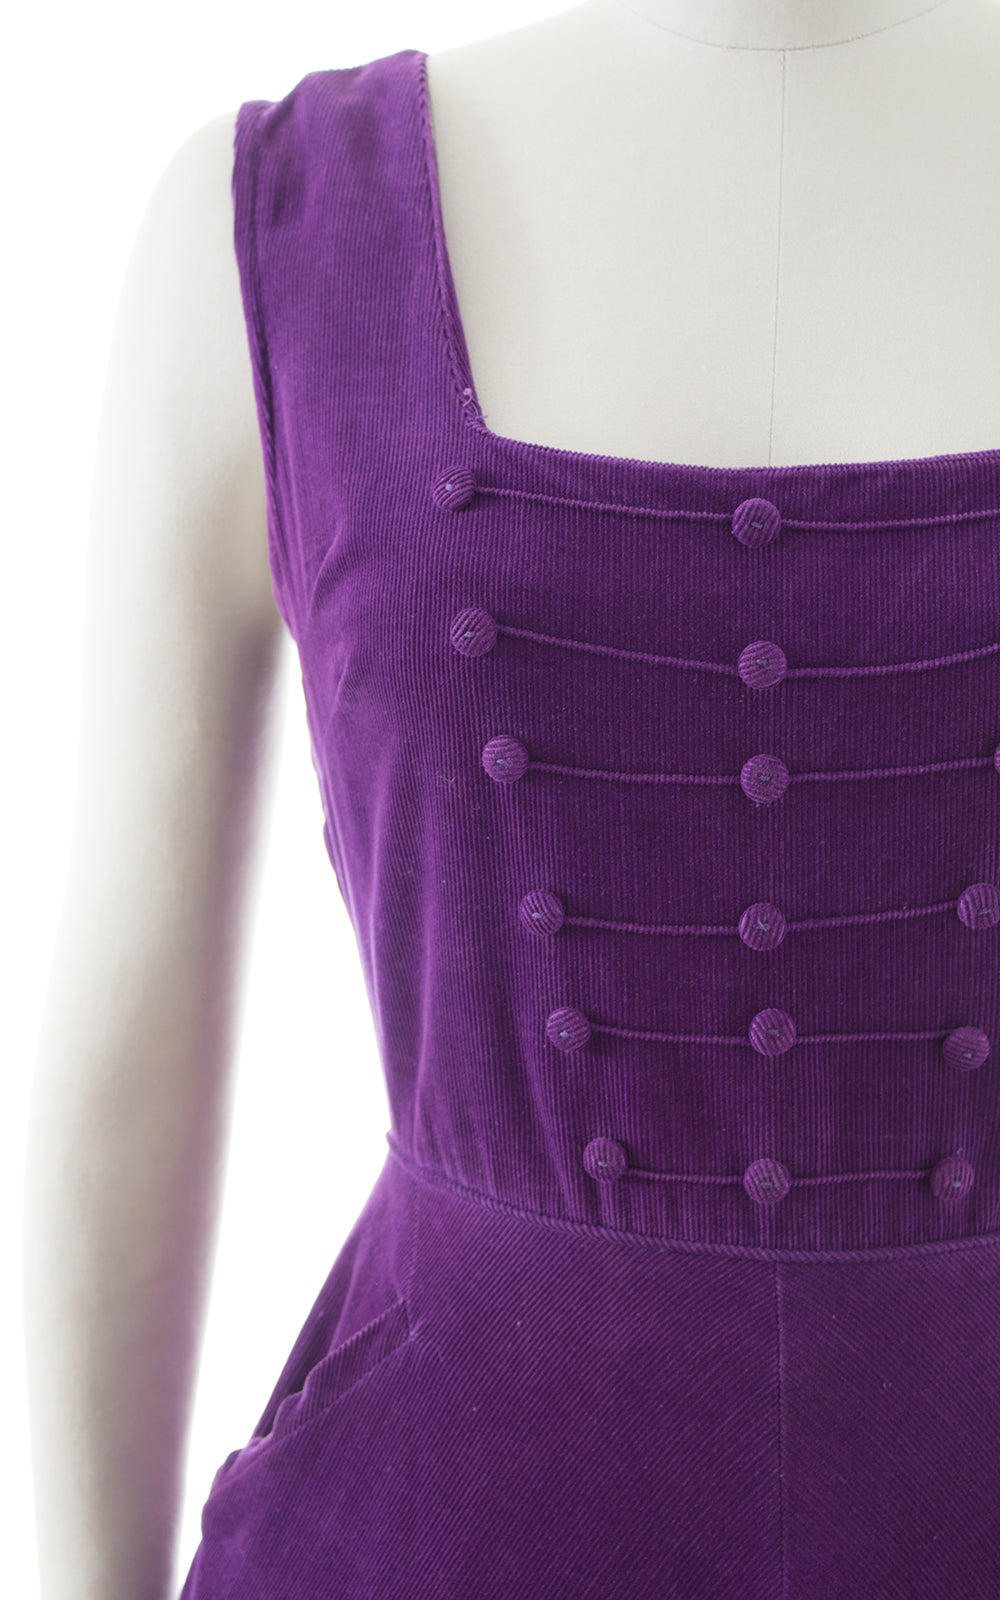 1950s Purple Corduroy Dress with Pockets BirthdayLifeVintage